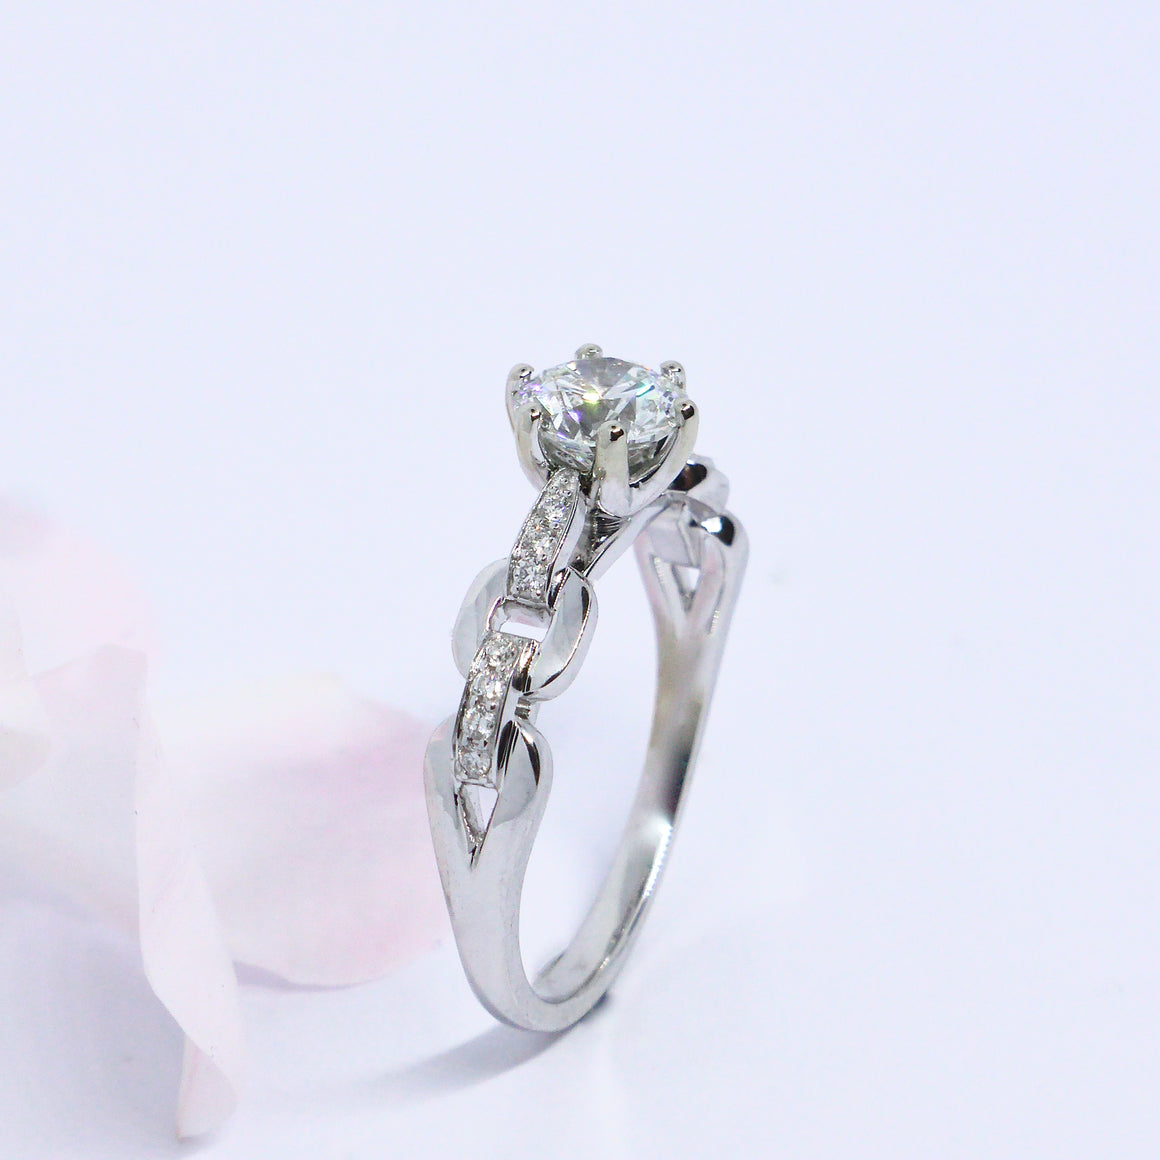 Diamond engagement ring byron bay